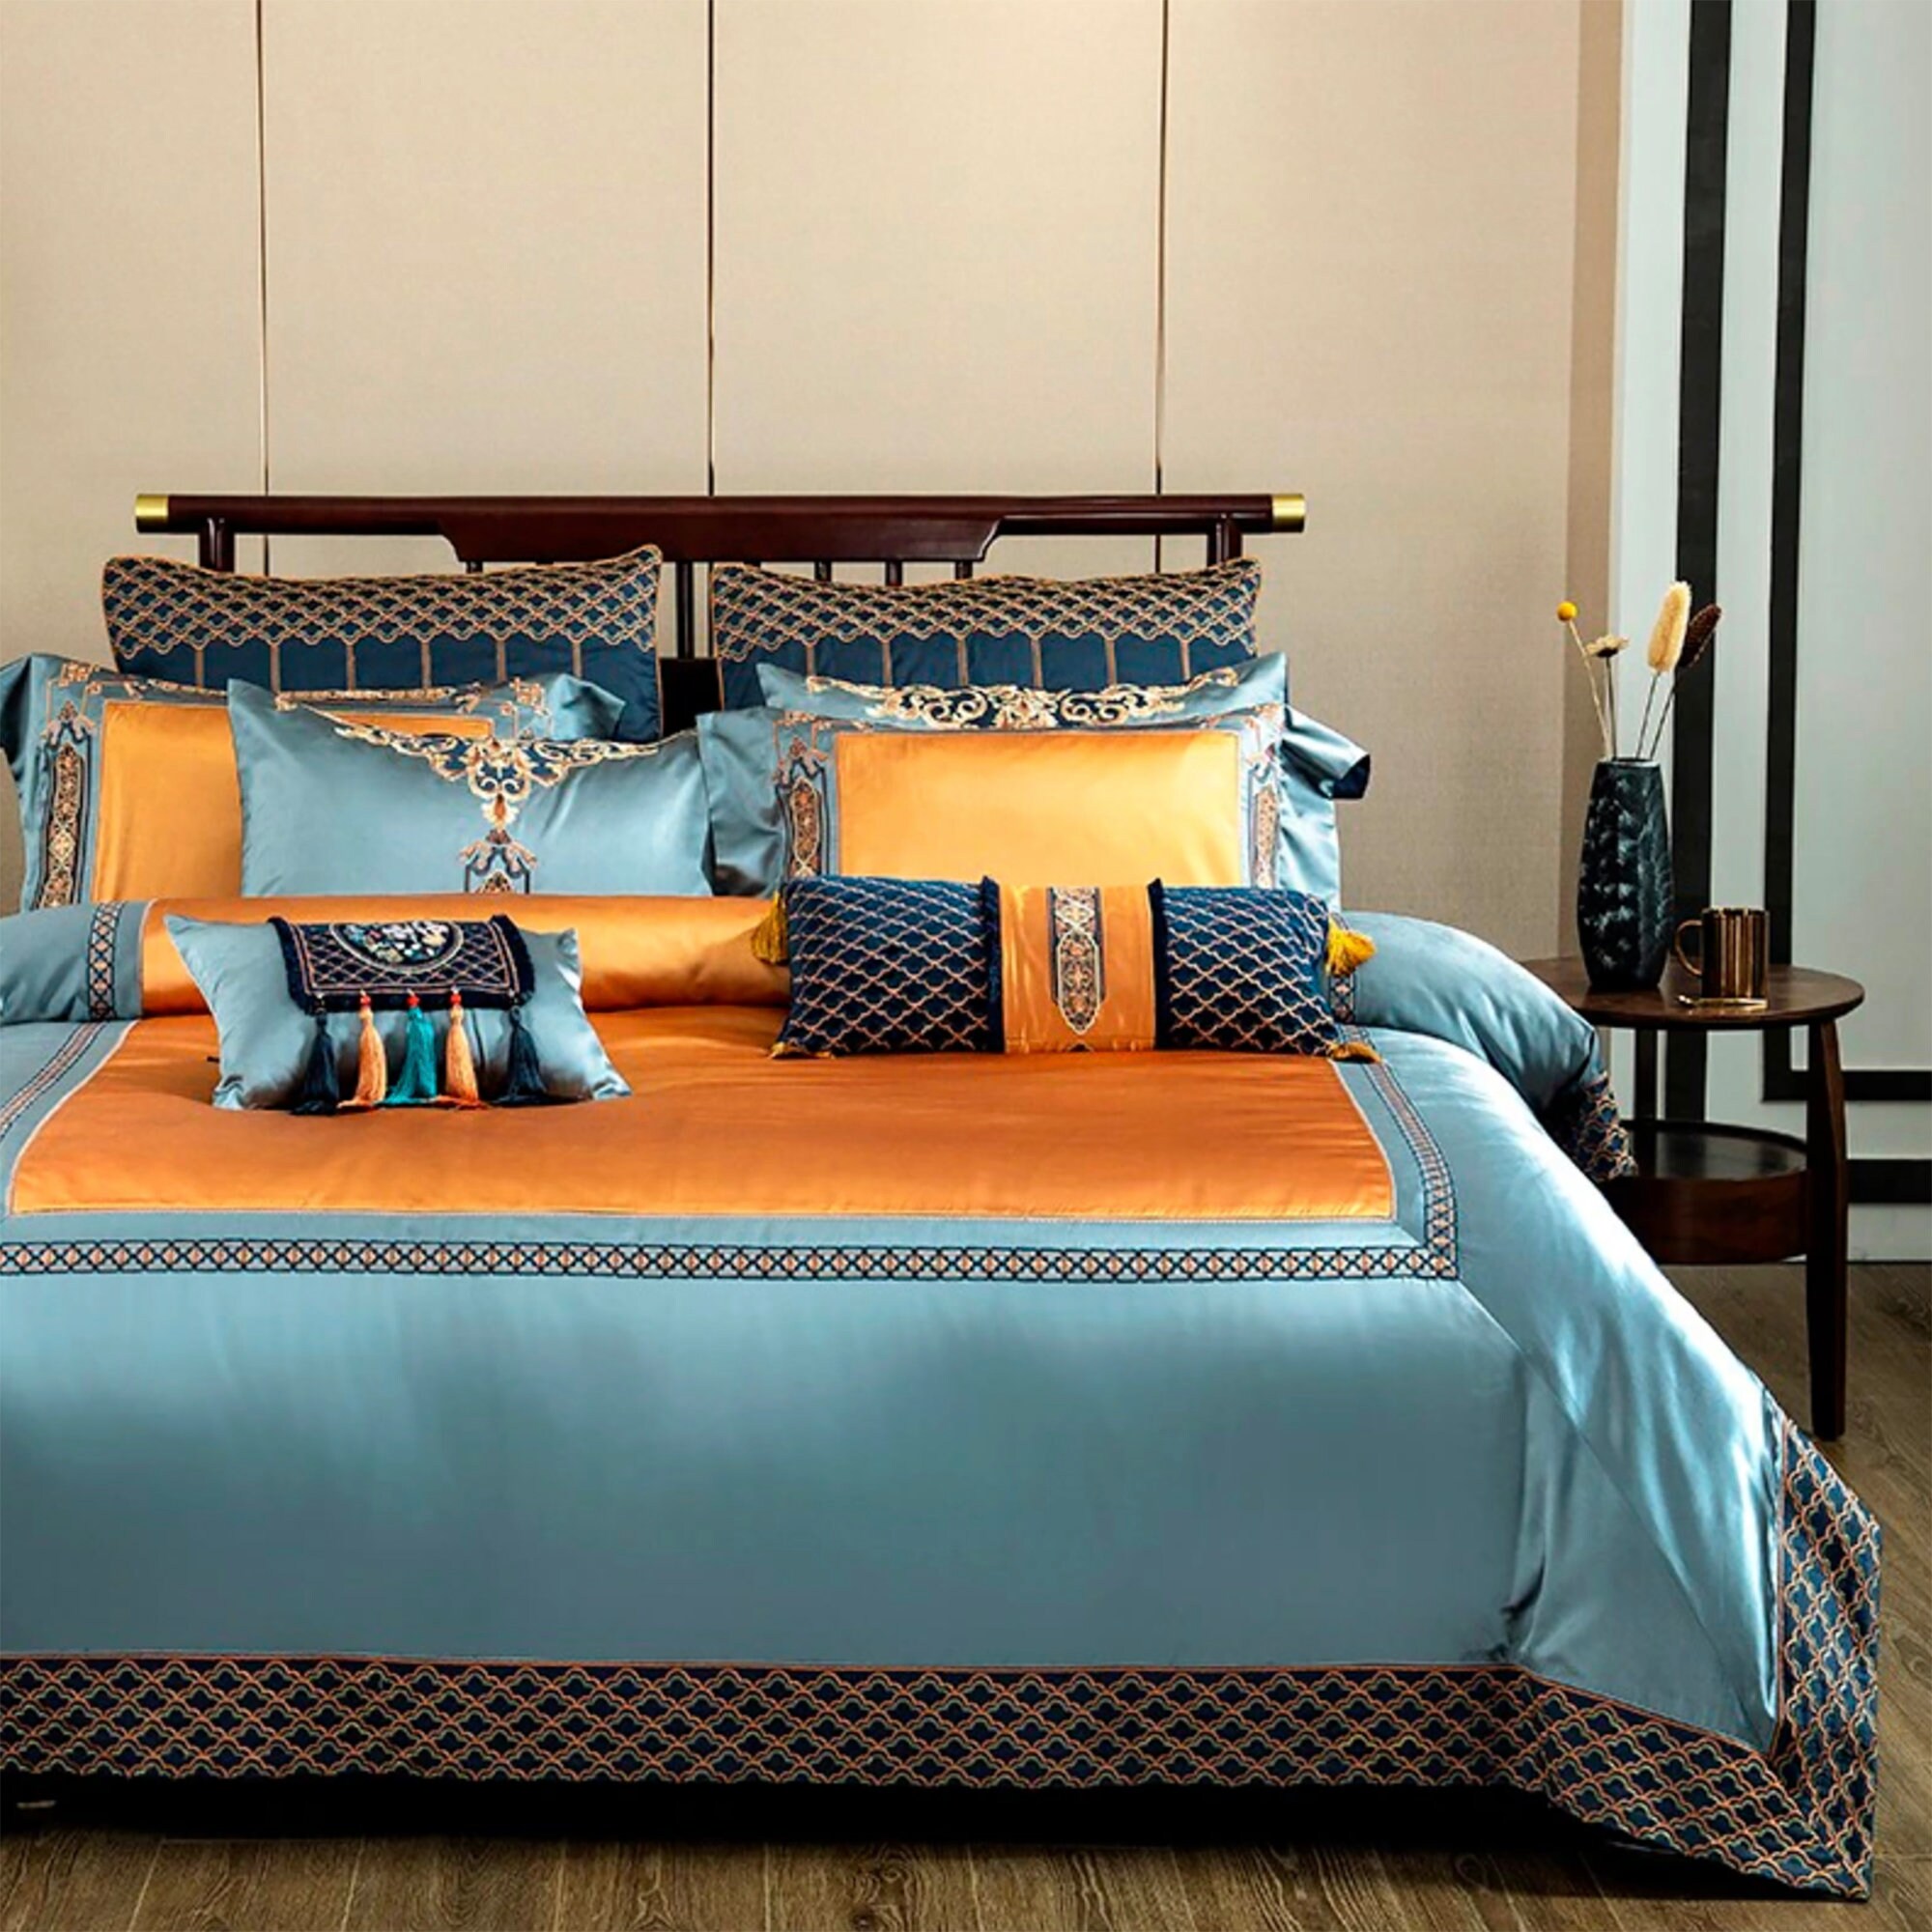 lv2 louis vuitton custom bedding set #1 (duvet cover & pillowcases)